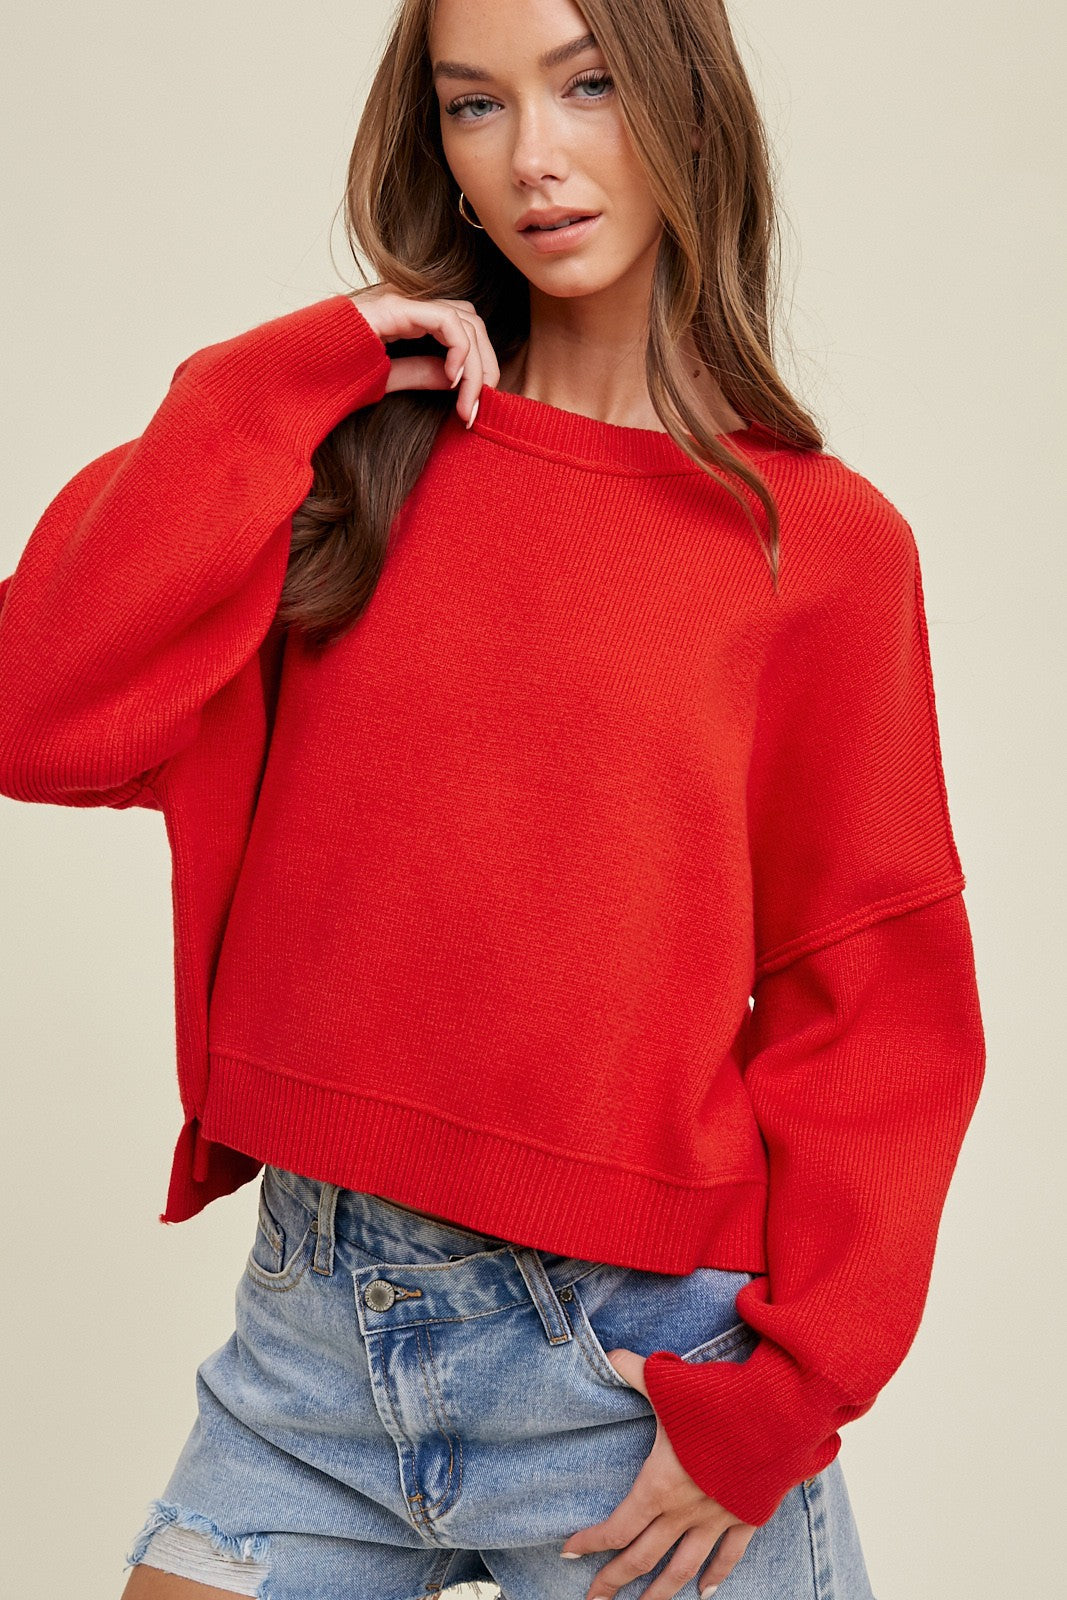 Peyton Sweater - Red - FINAL SALE